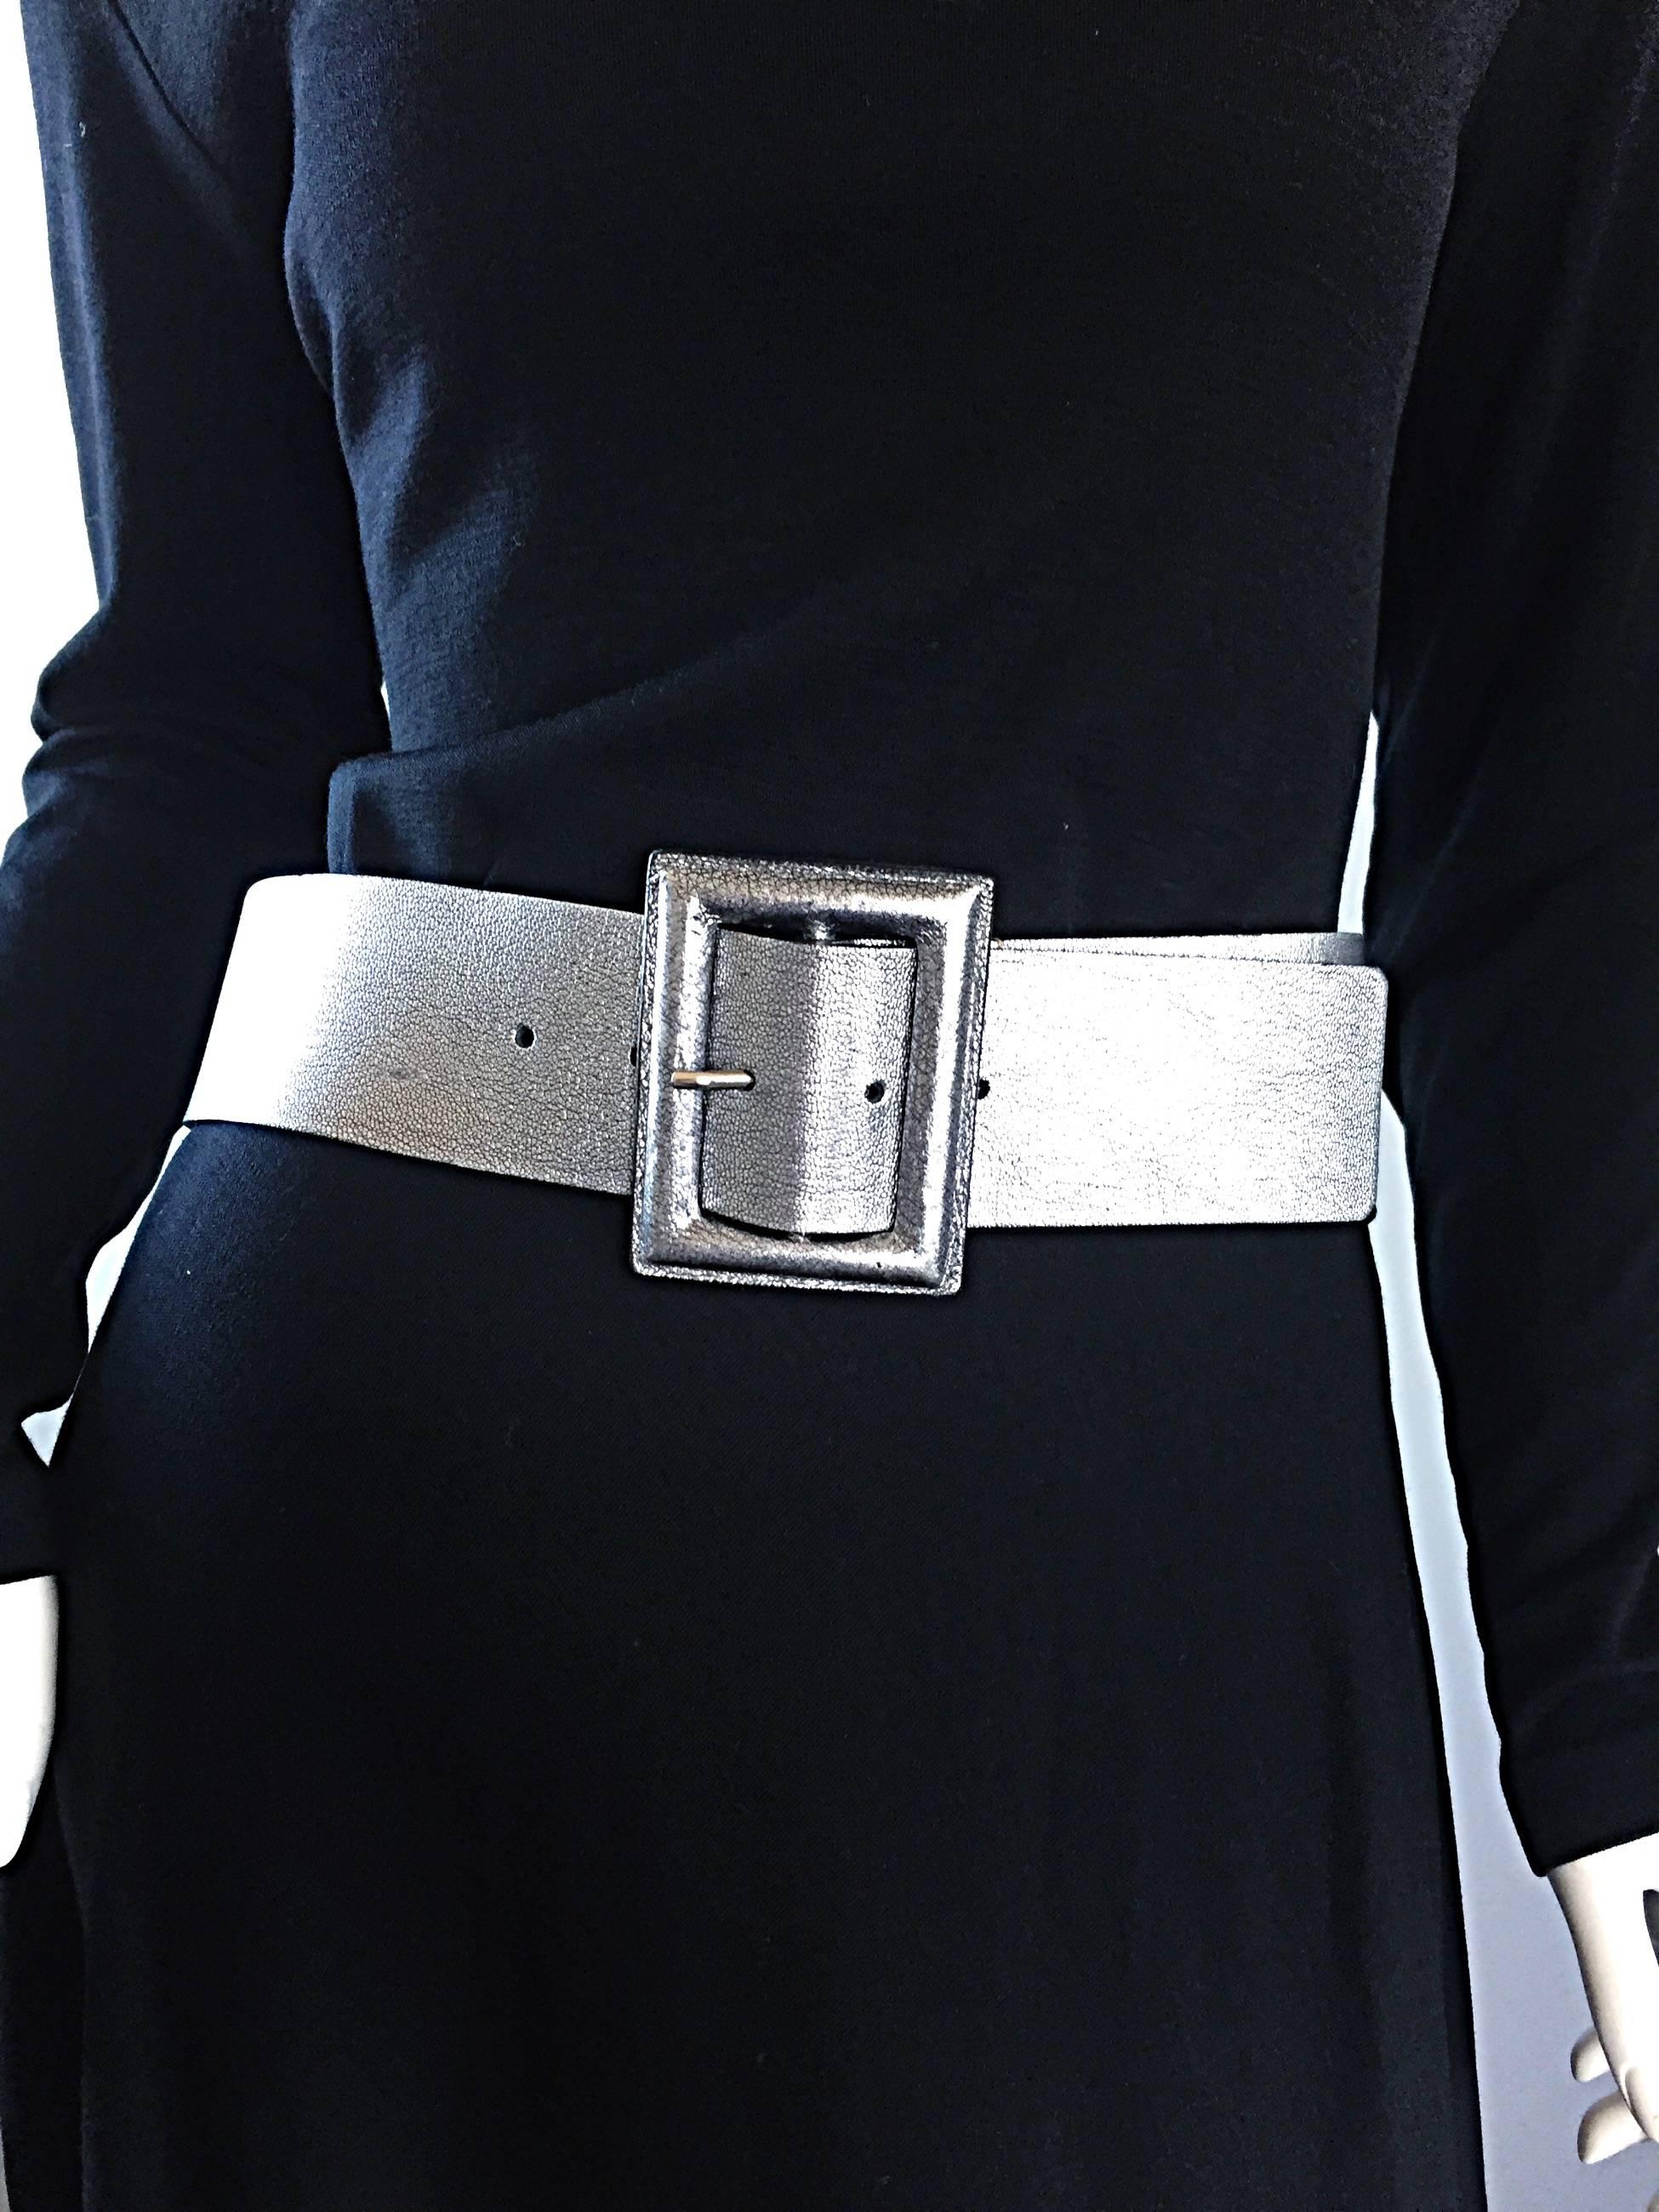 silver leather belt